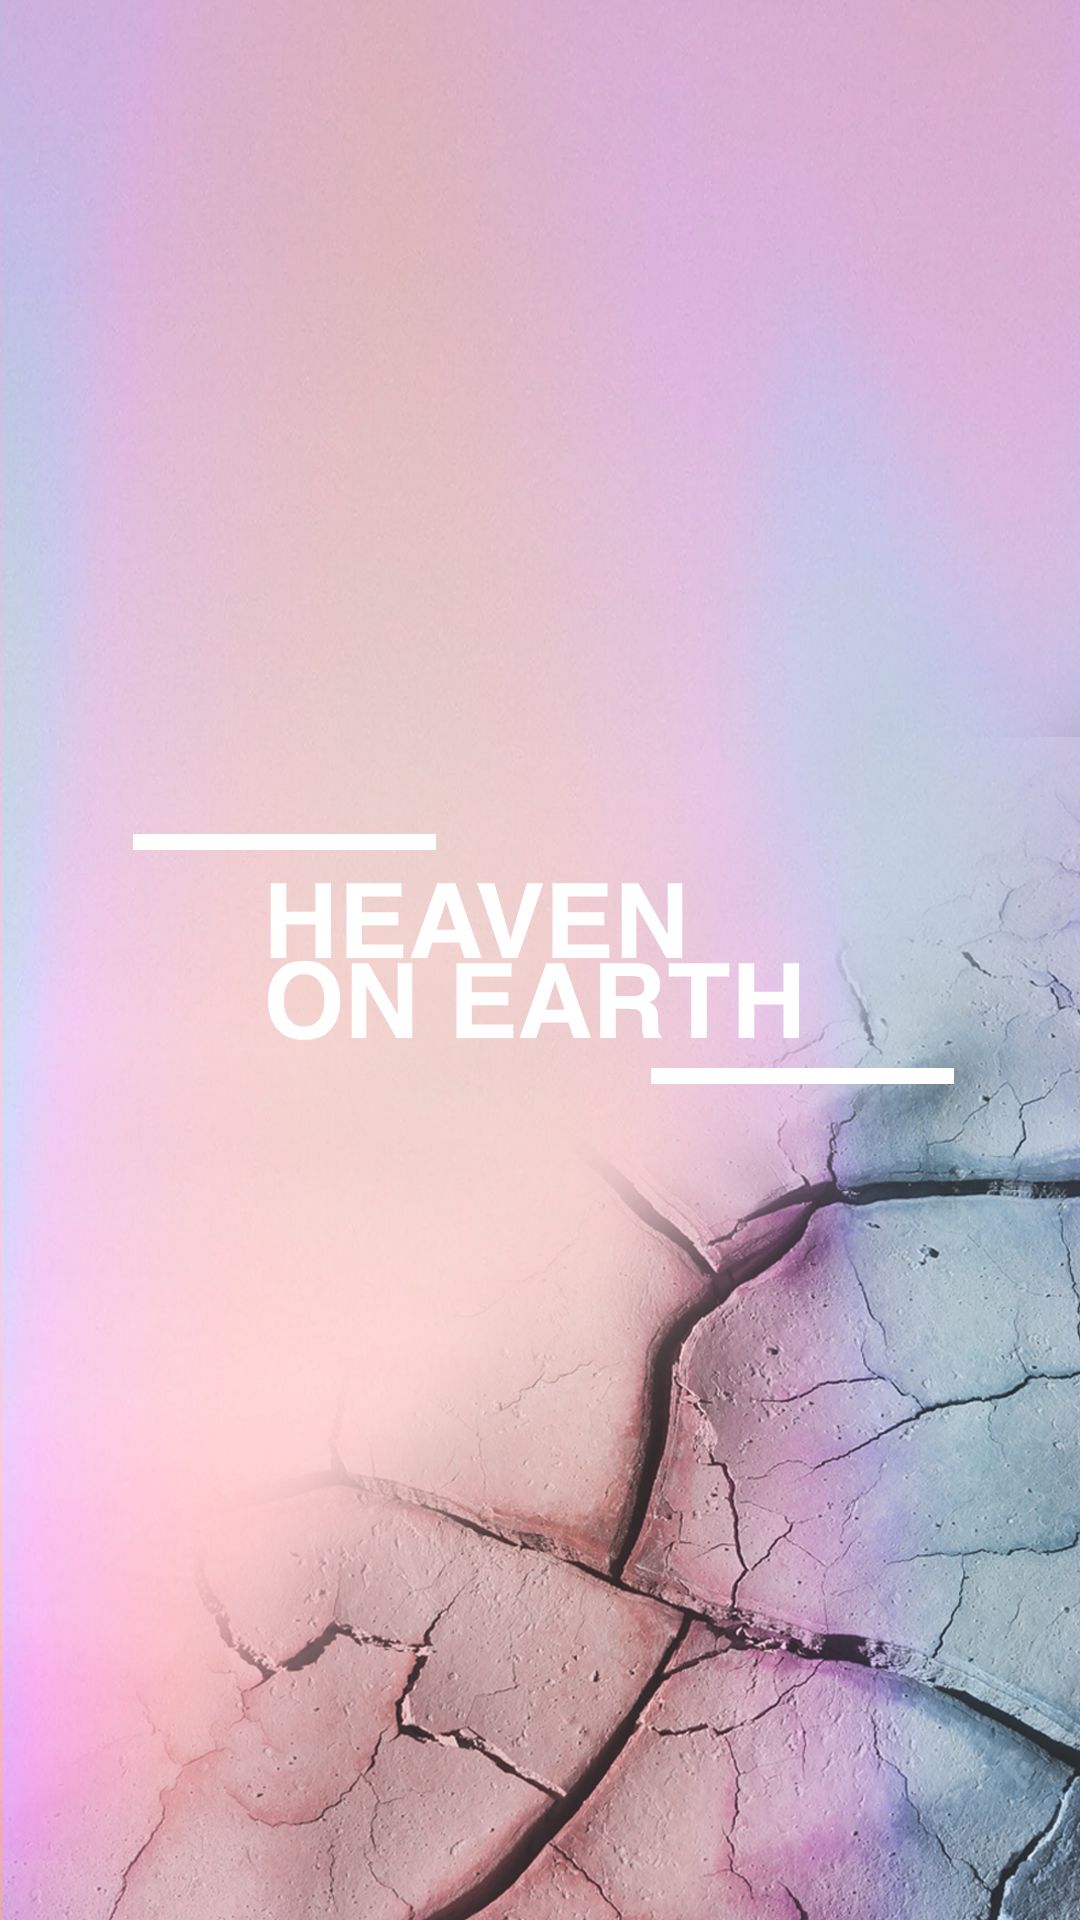 Heaven on Earth Digital Downloads. Blog. Eagle Brook Church